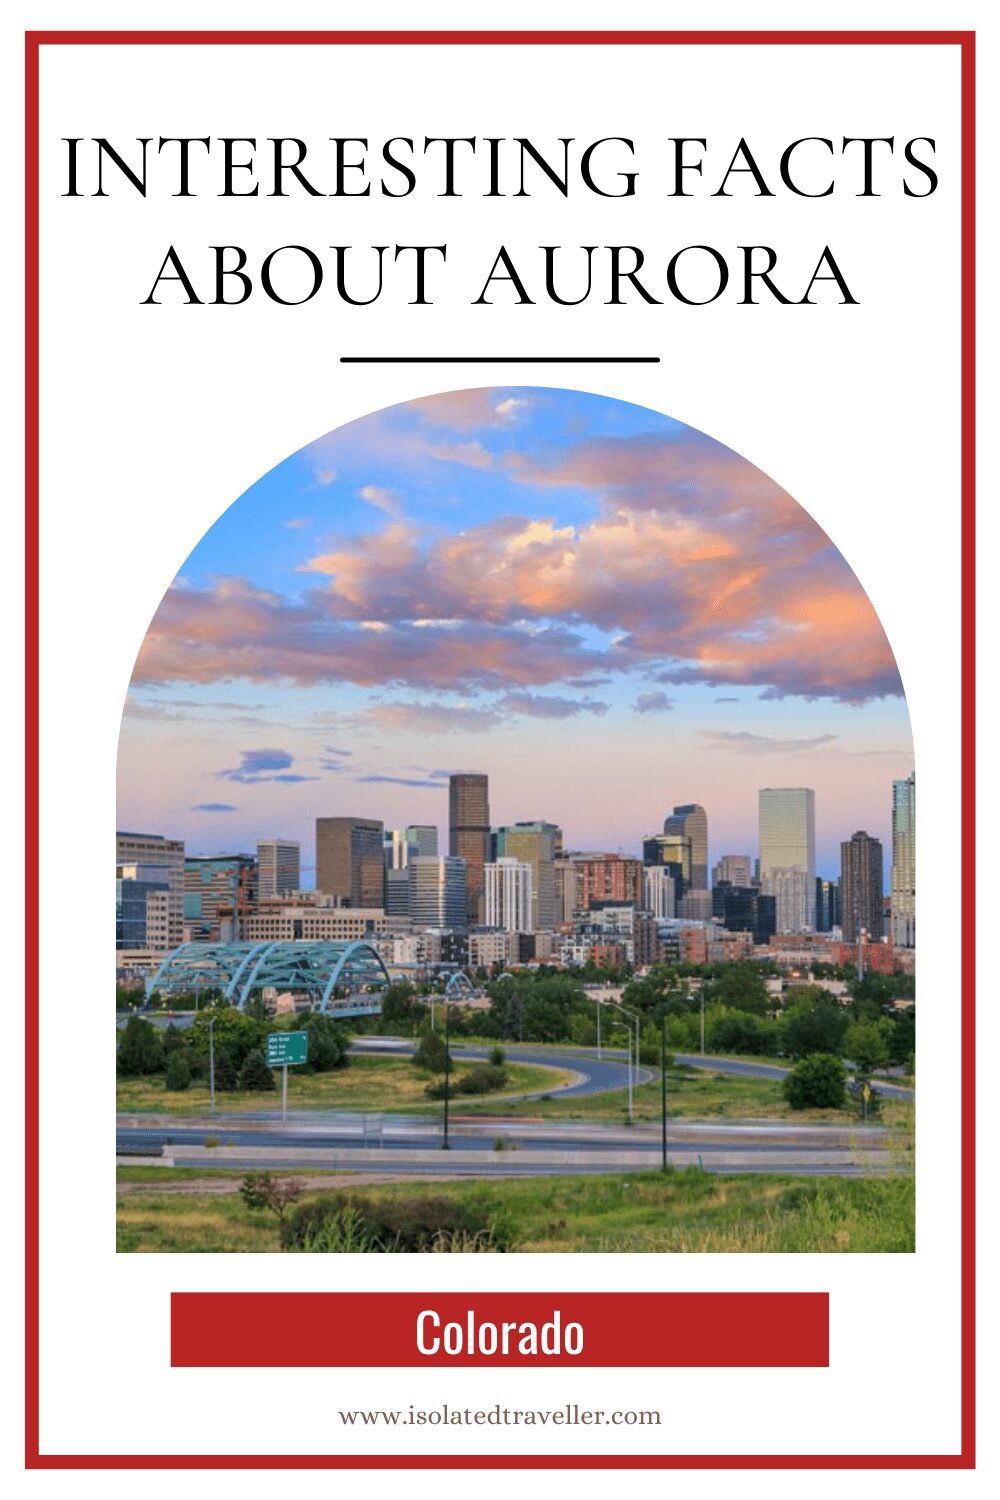 Facts About Aurora, Colorado